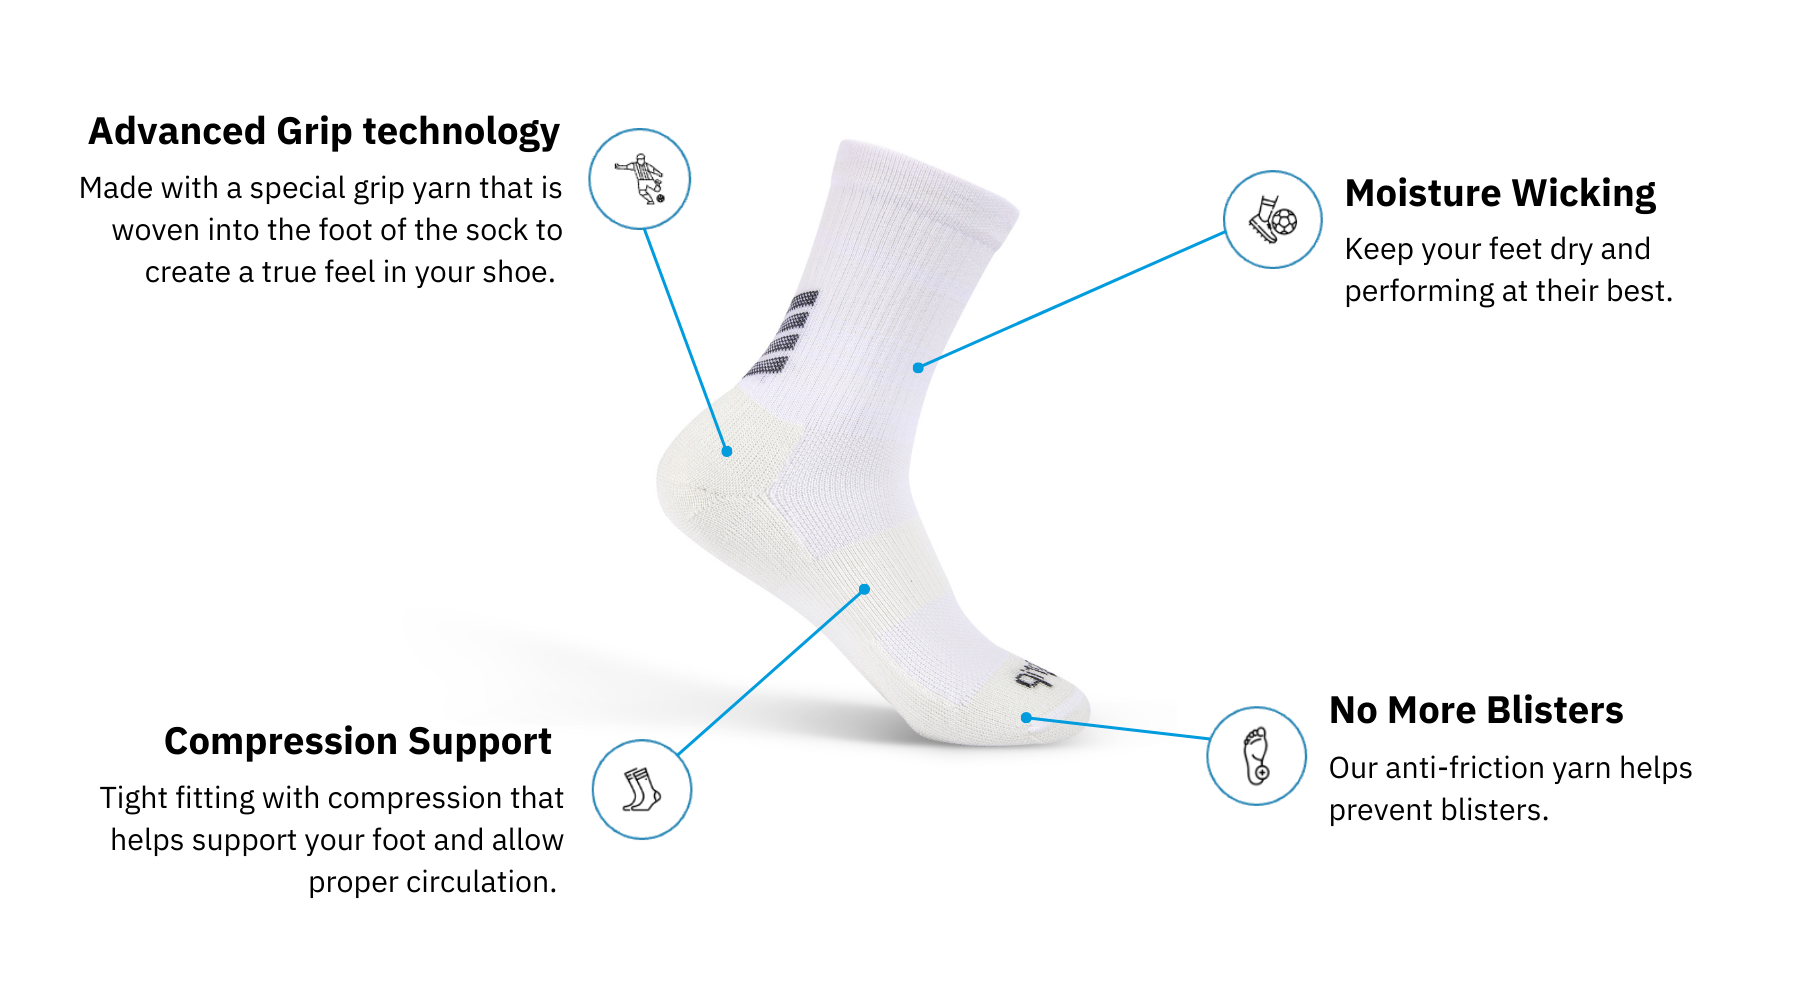 Can Grip Socks Prevent Blisters?